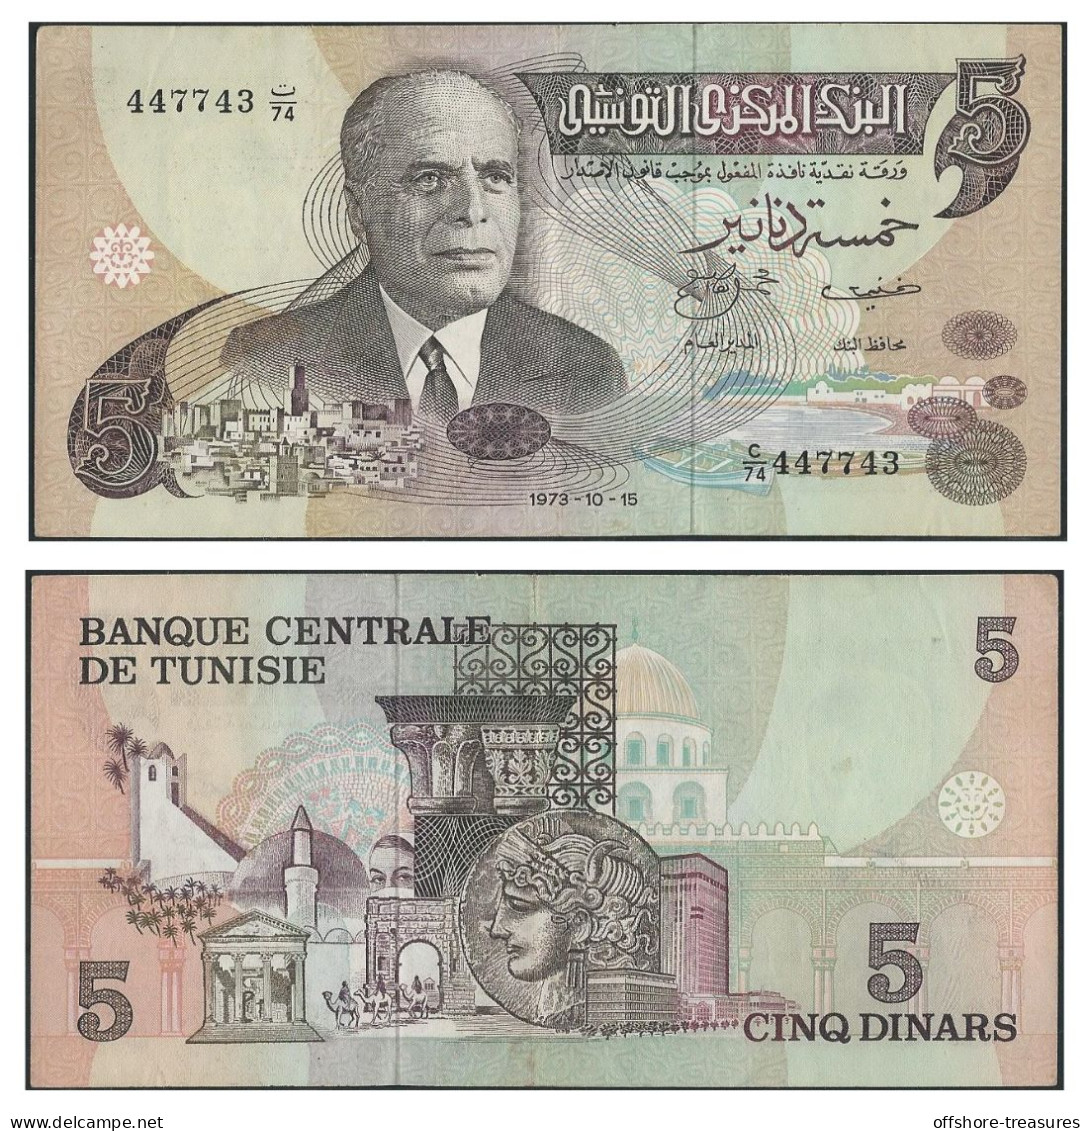 TUNISIA CENTRAL BANK FIVE DINAR 1973 BANKNOTE - TUNISIE BILLET 5 DINARS - TUNIS - Tunesien